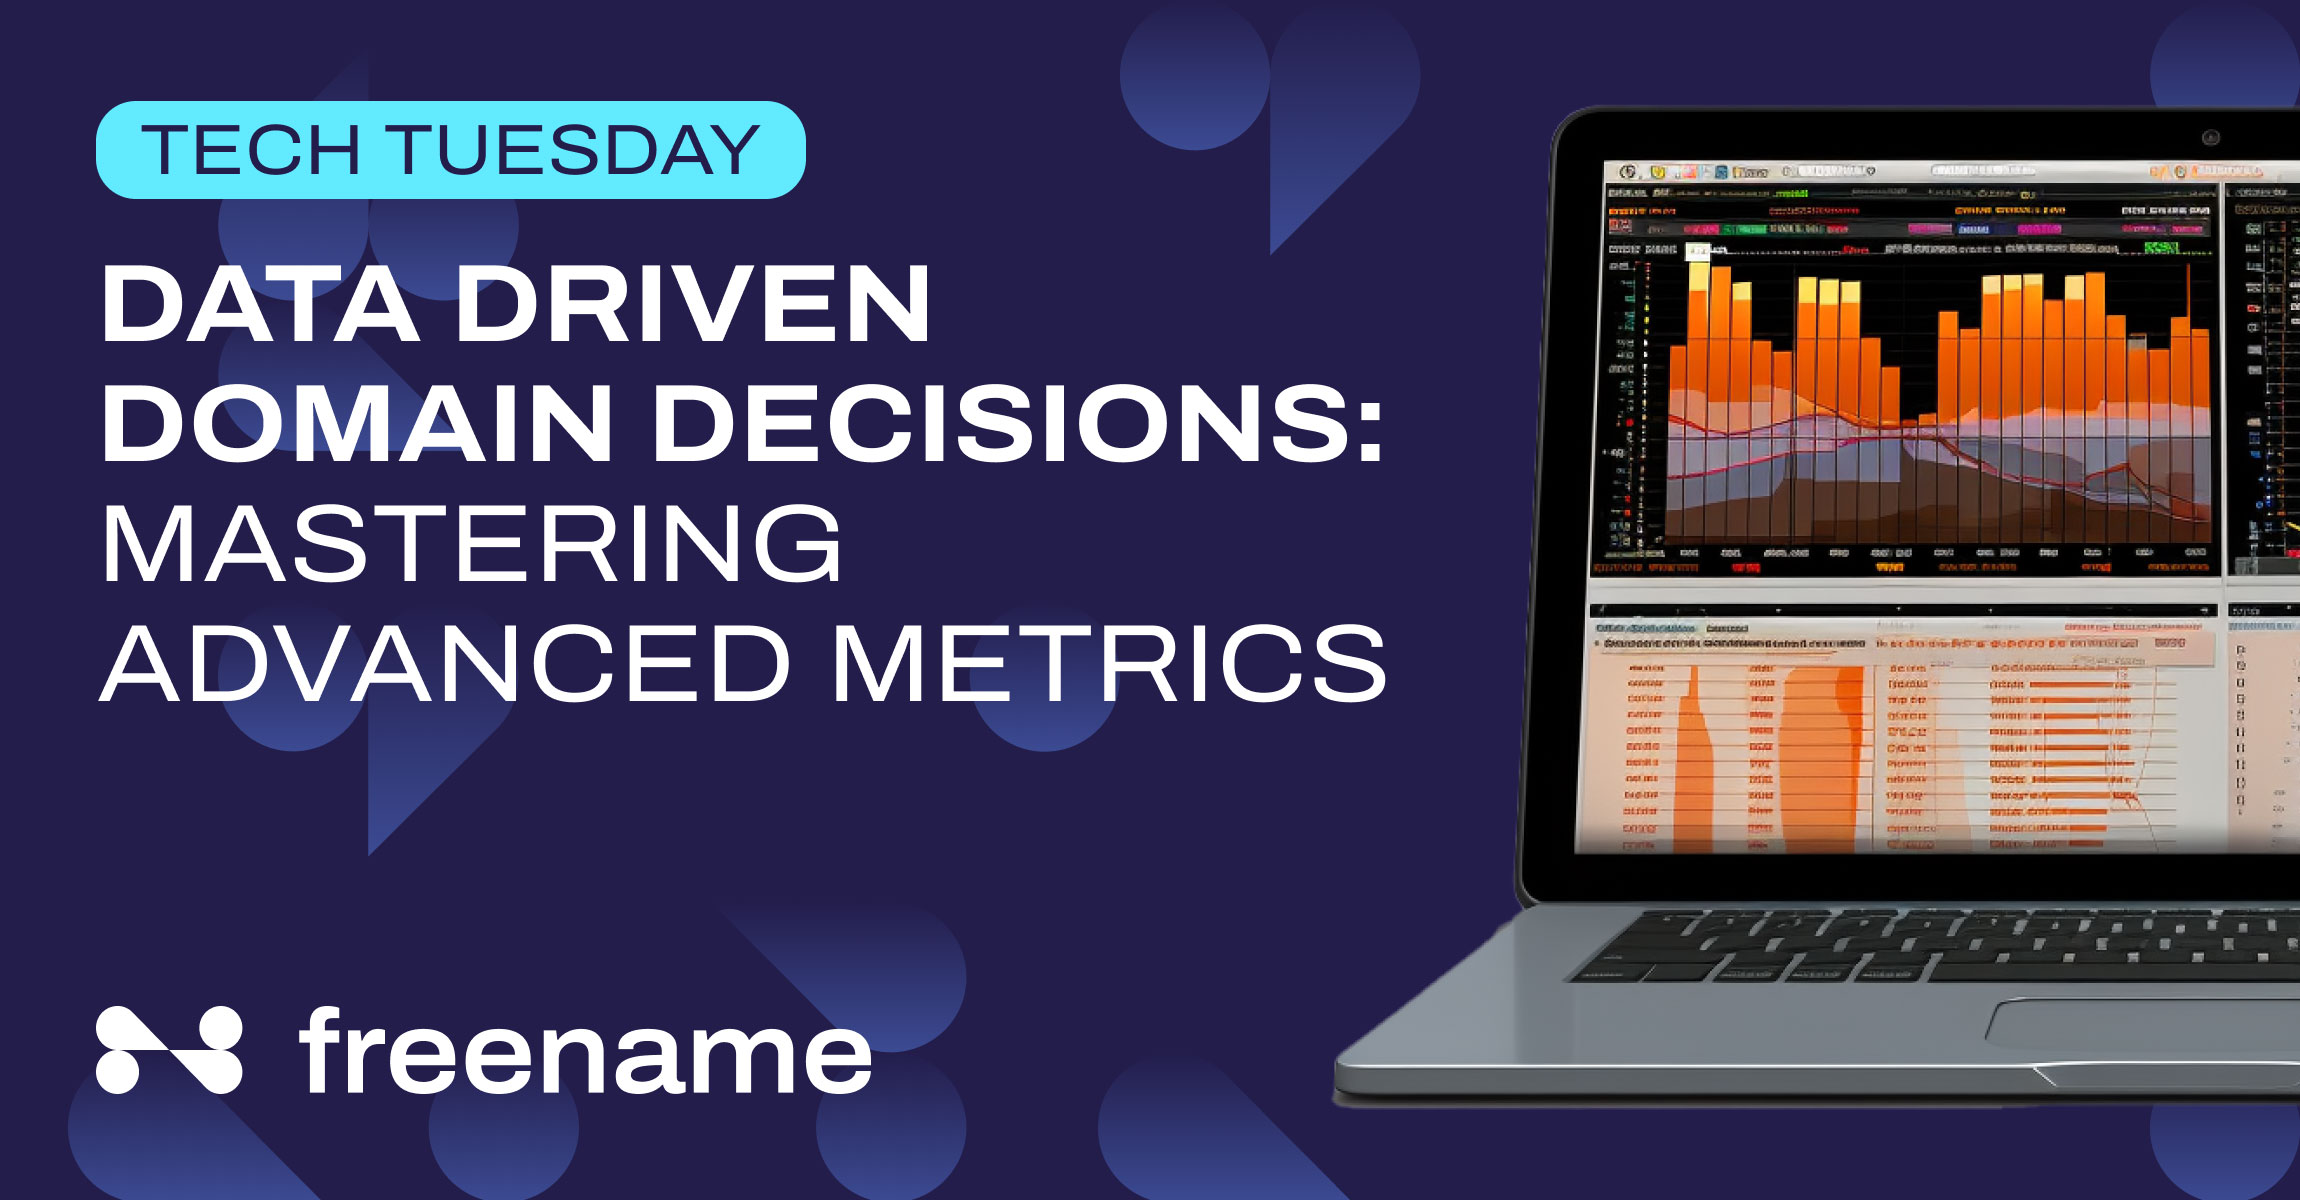 Tech Tuesday: Data Driven Domain Decisions: Mastering Advanced Metrics